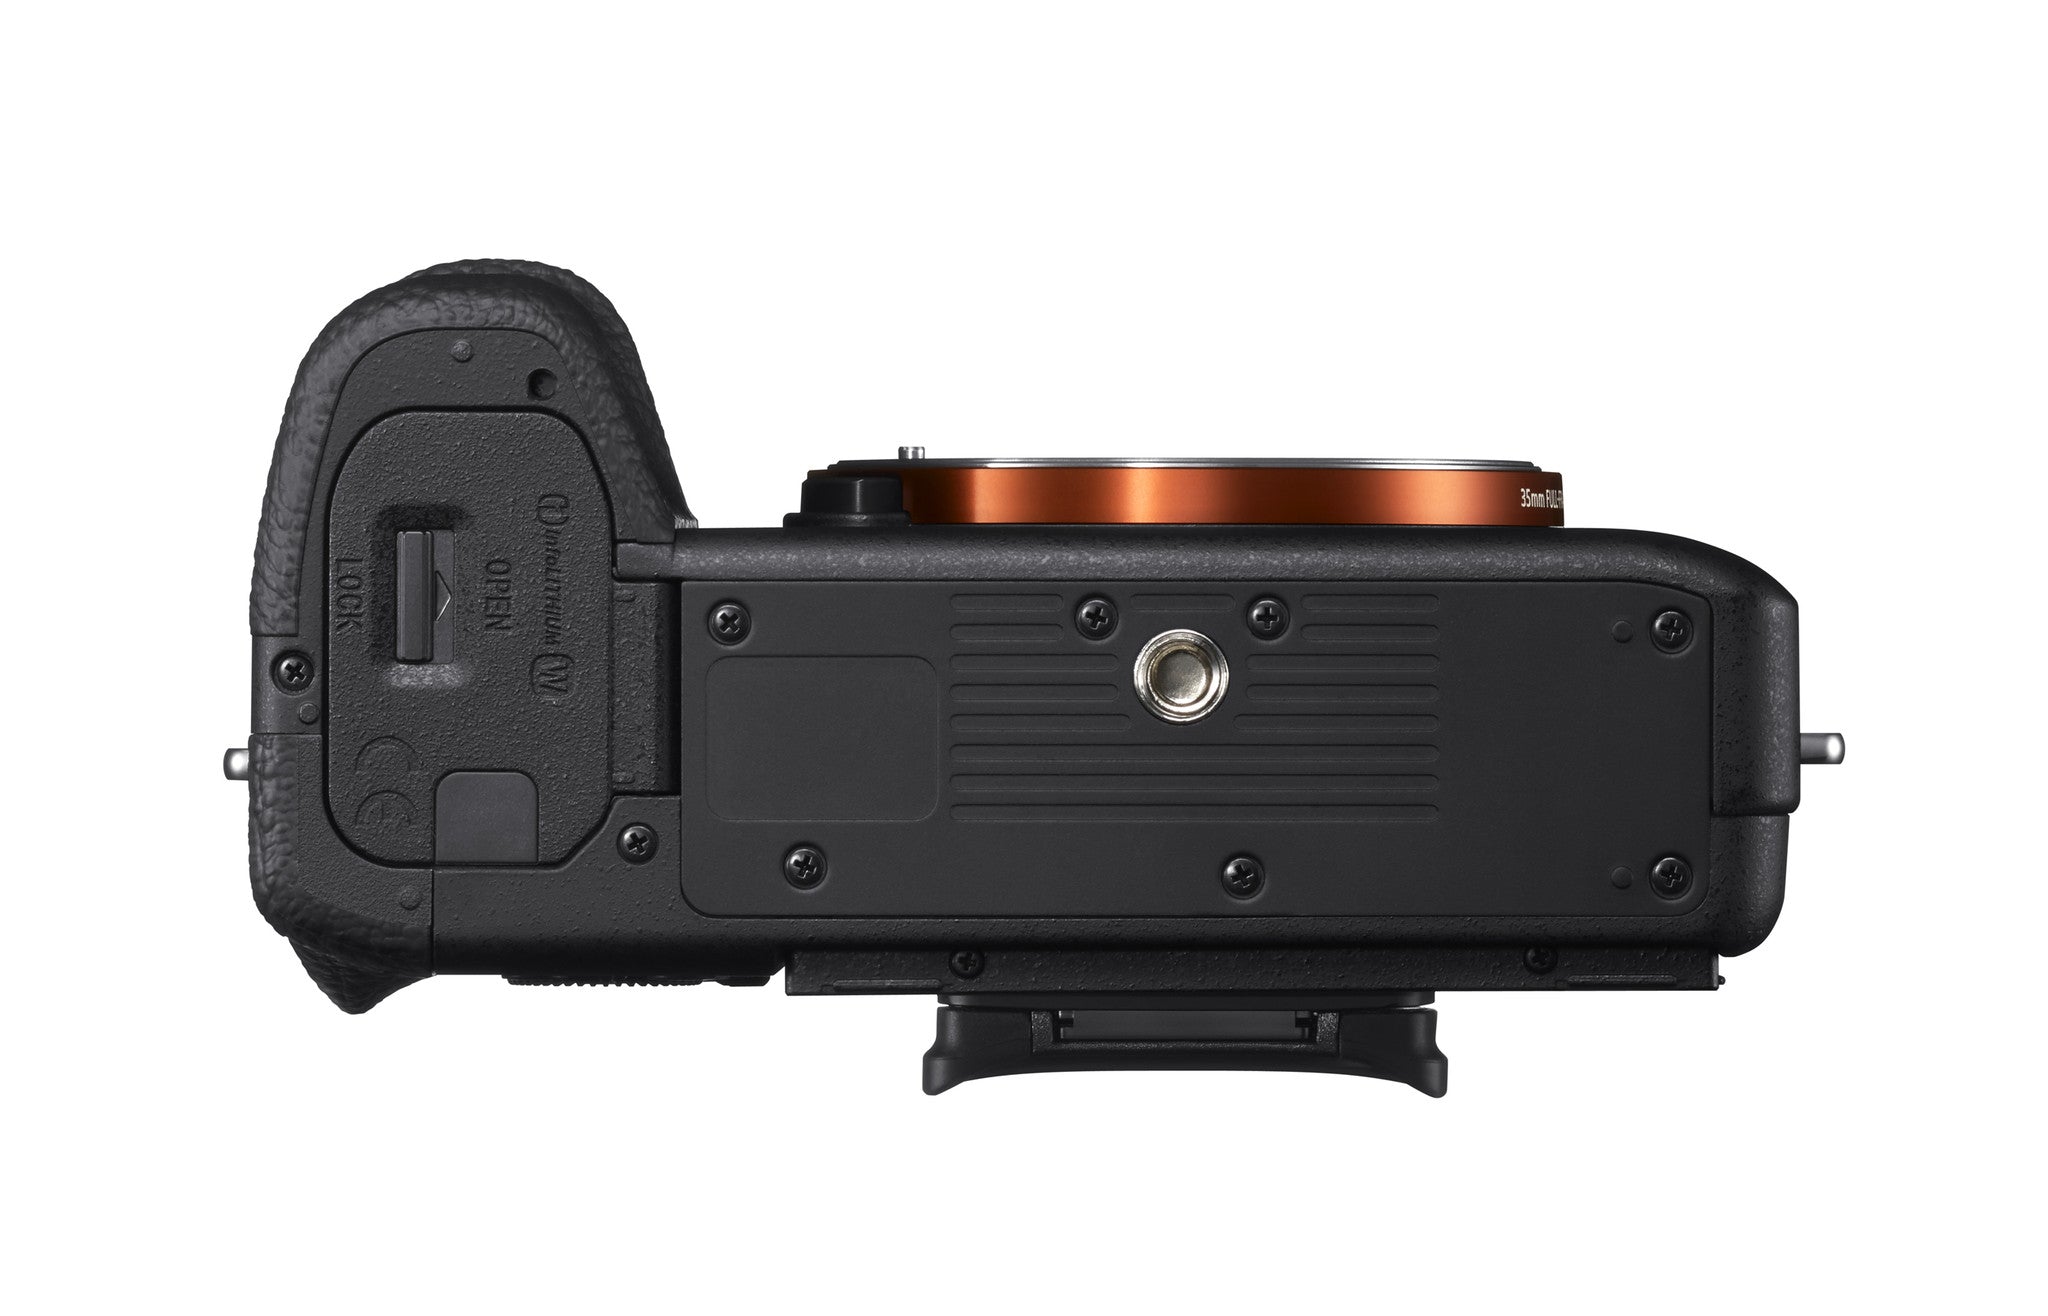 Sony Alpha A7S II Digital Camera Body, camera mirrorless cameras, Sony - Pictureline  - 6